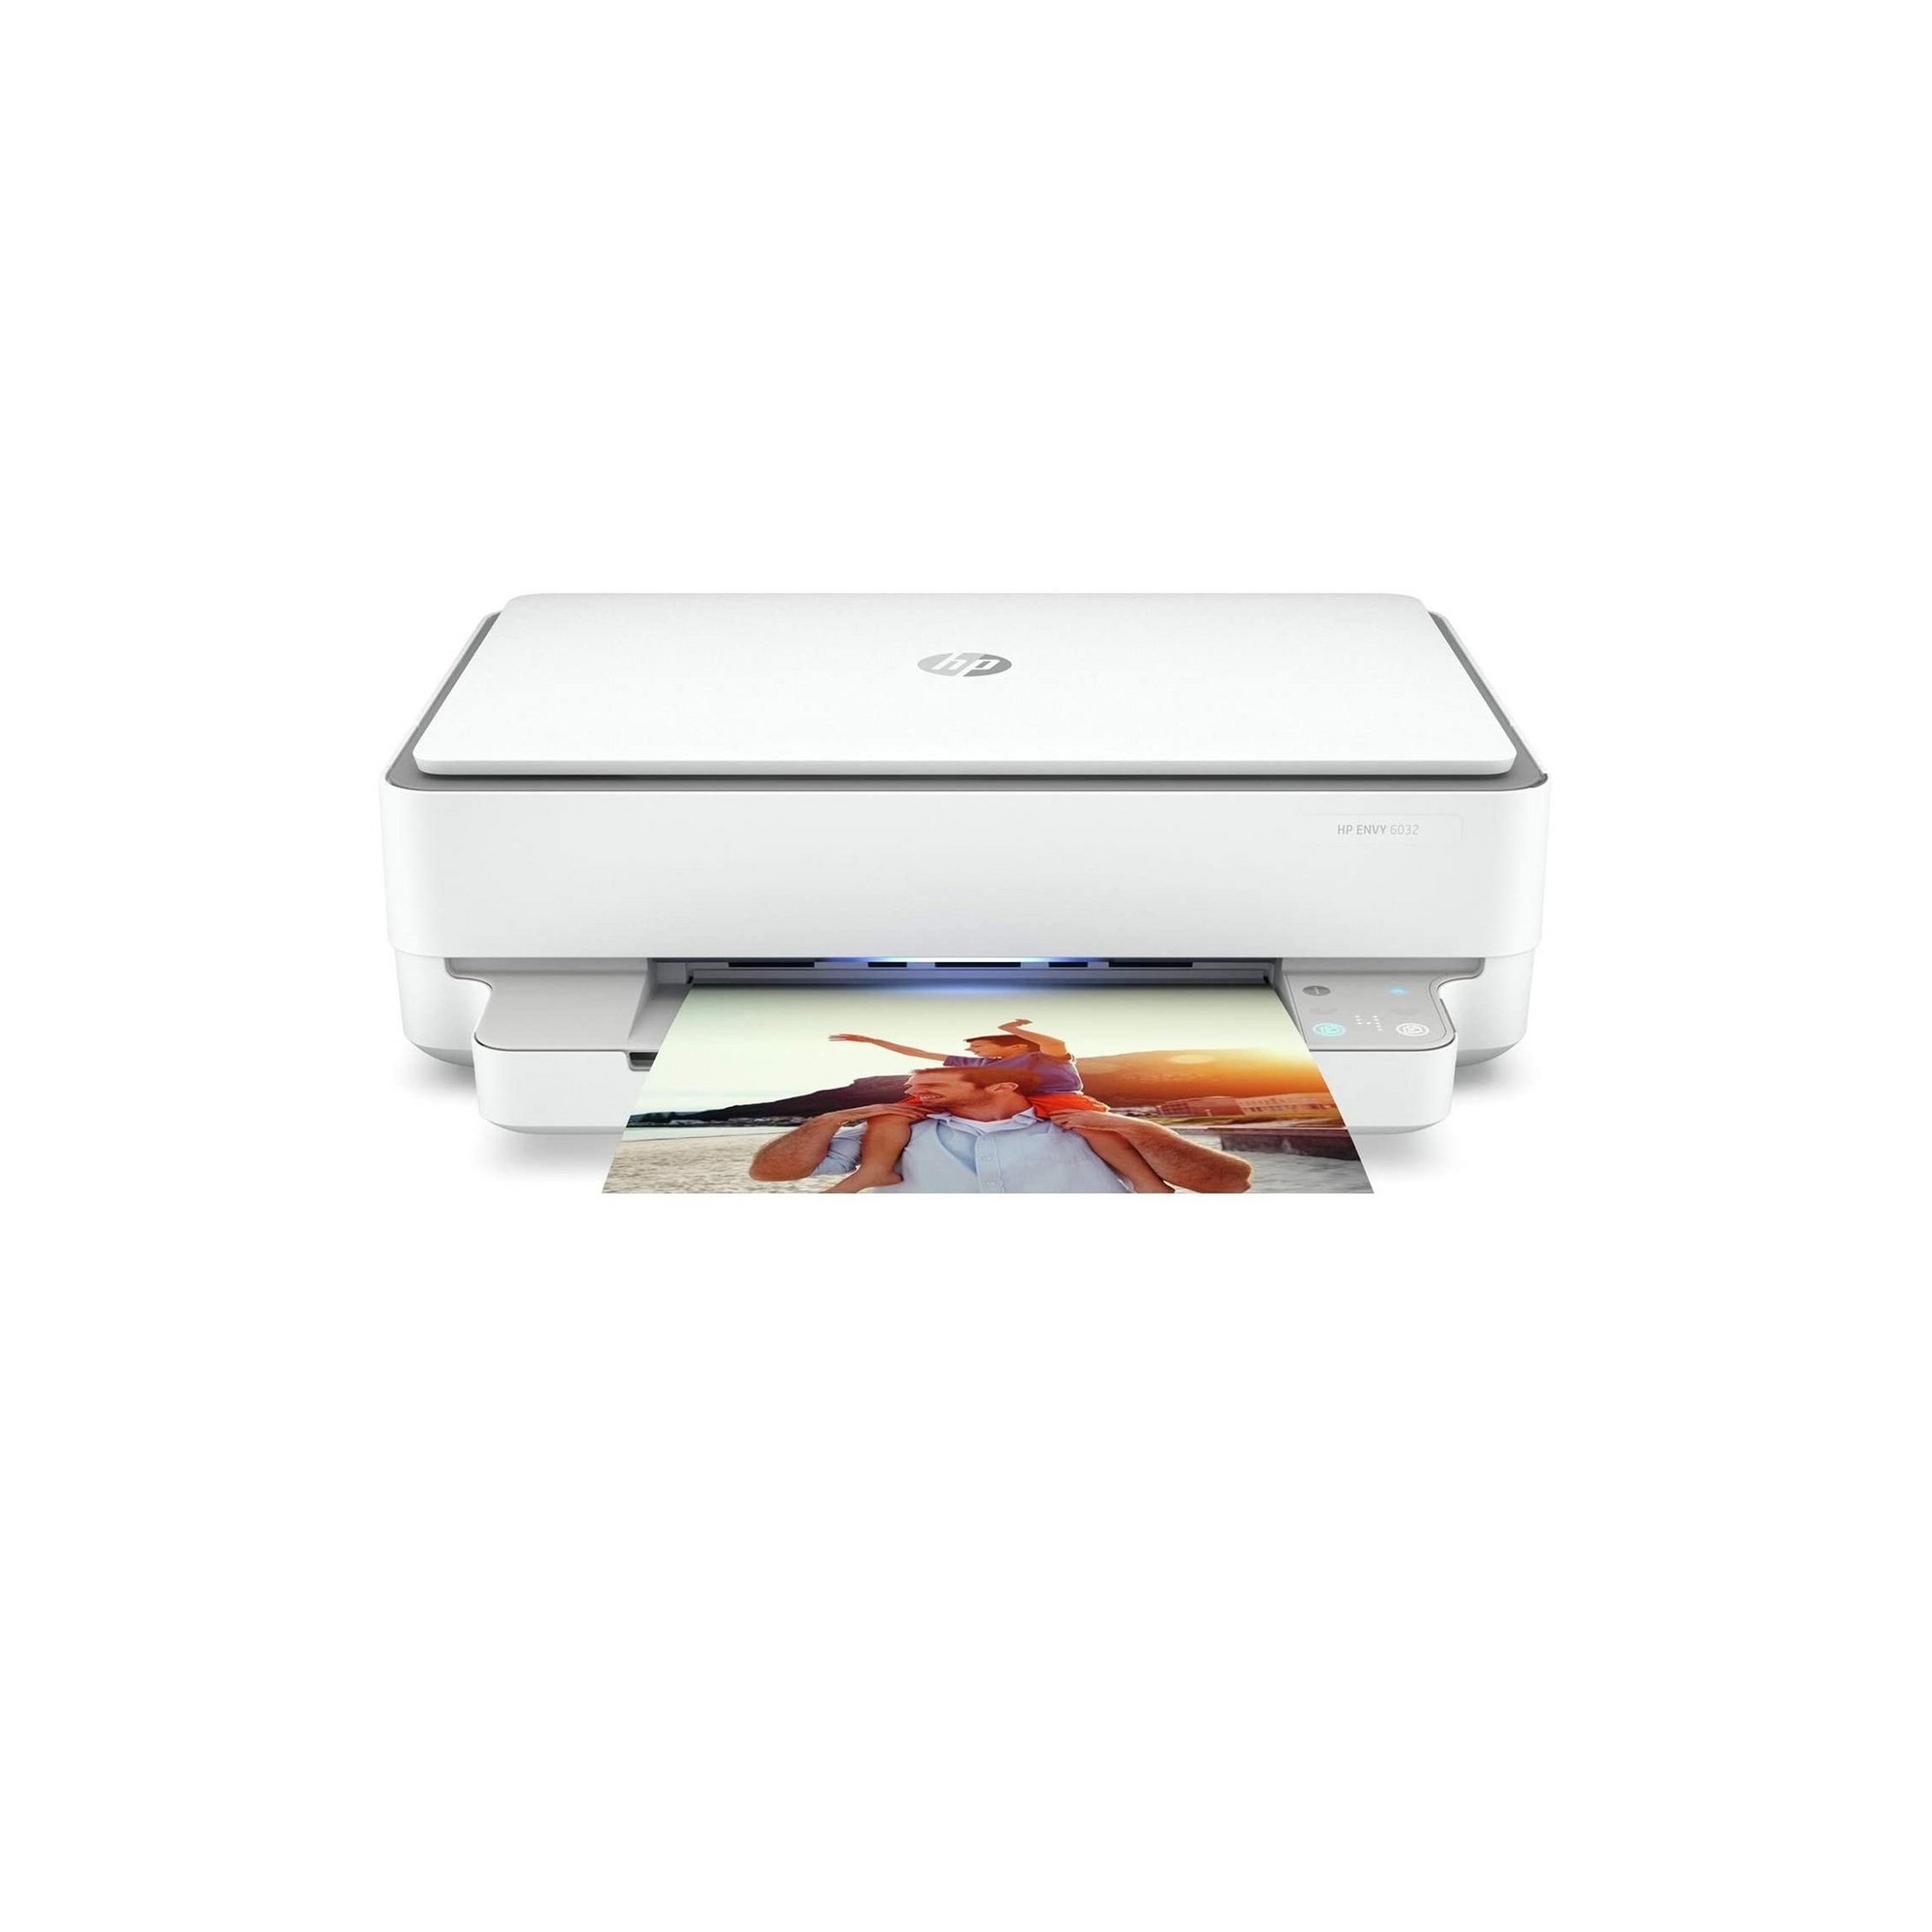 HP ENVY 6030 All-in-One Wireless Inkjet Printer